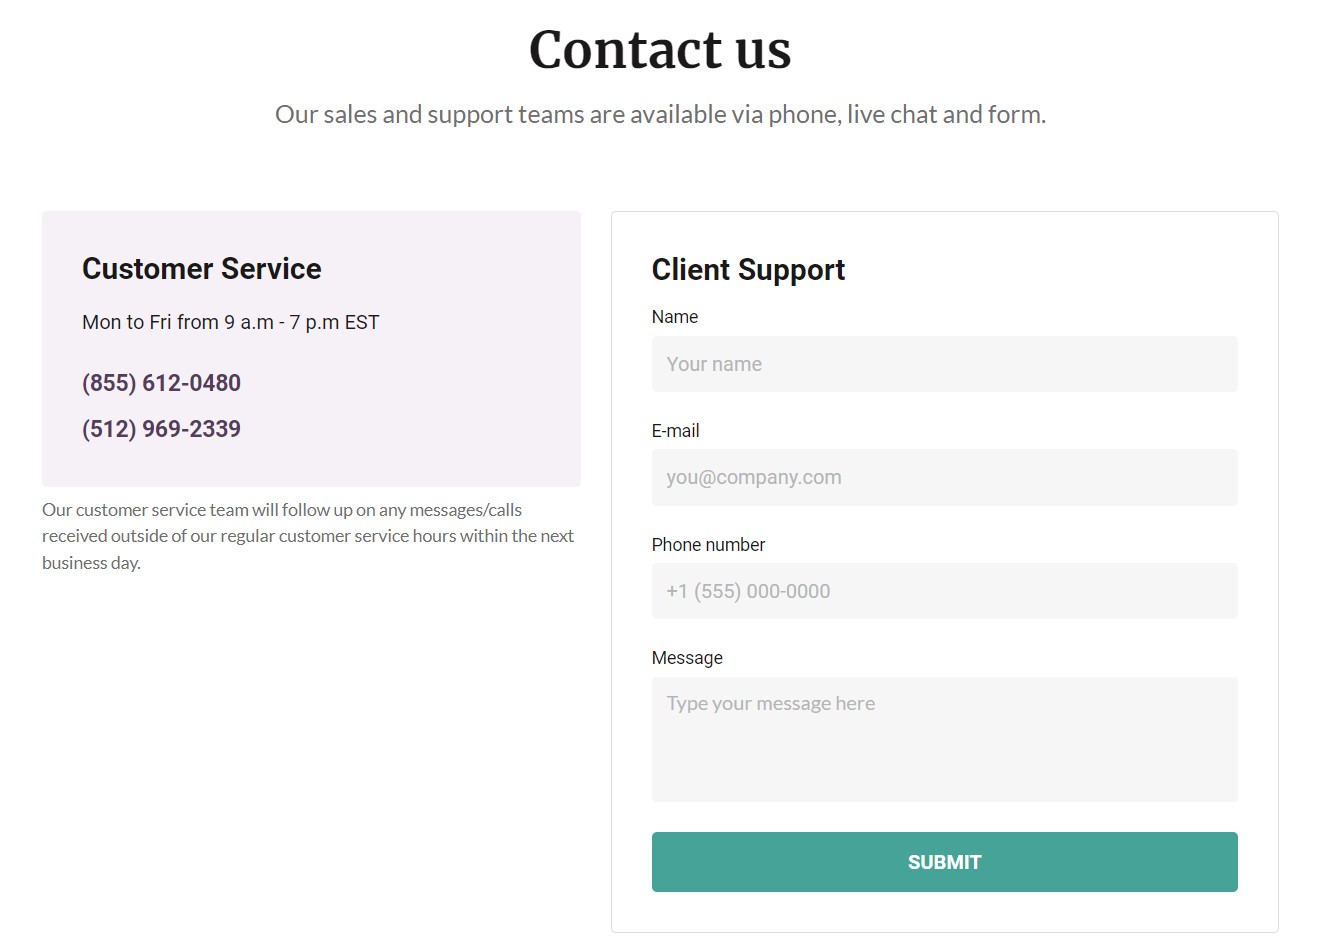 BetterLegal's customer support form